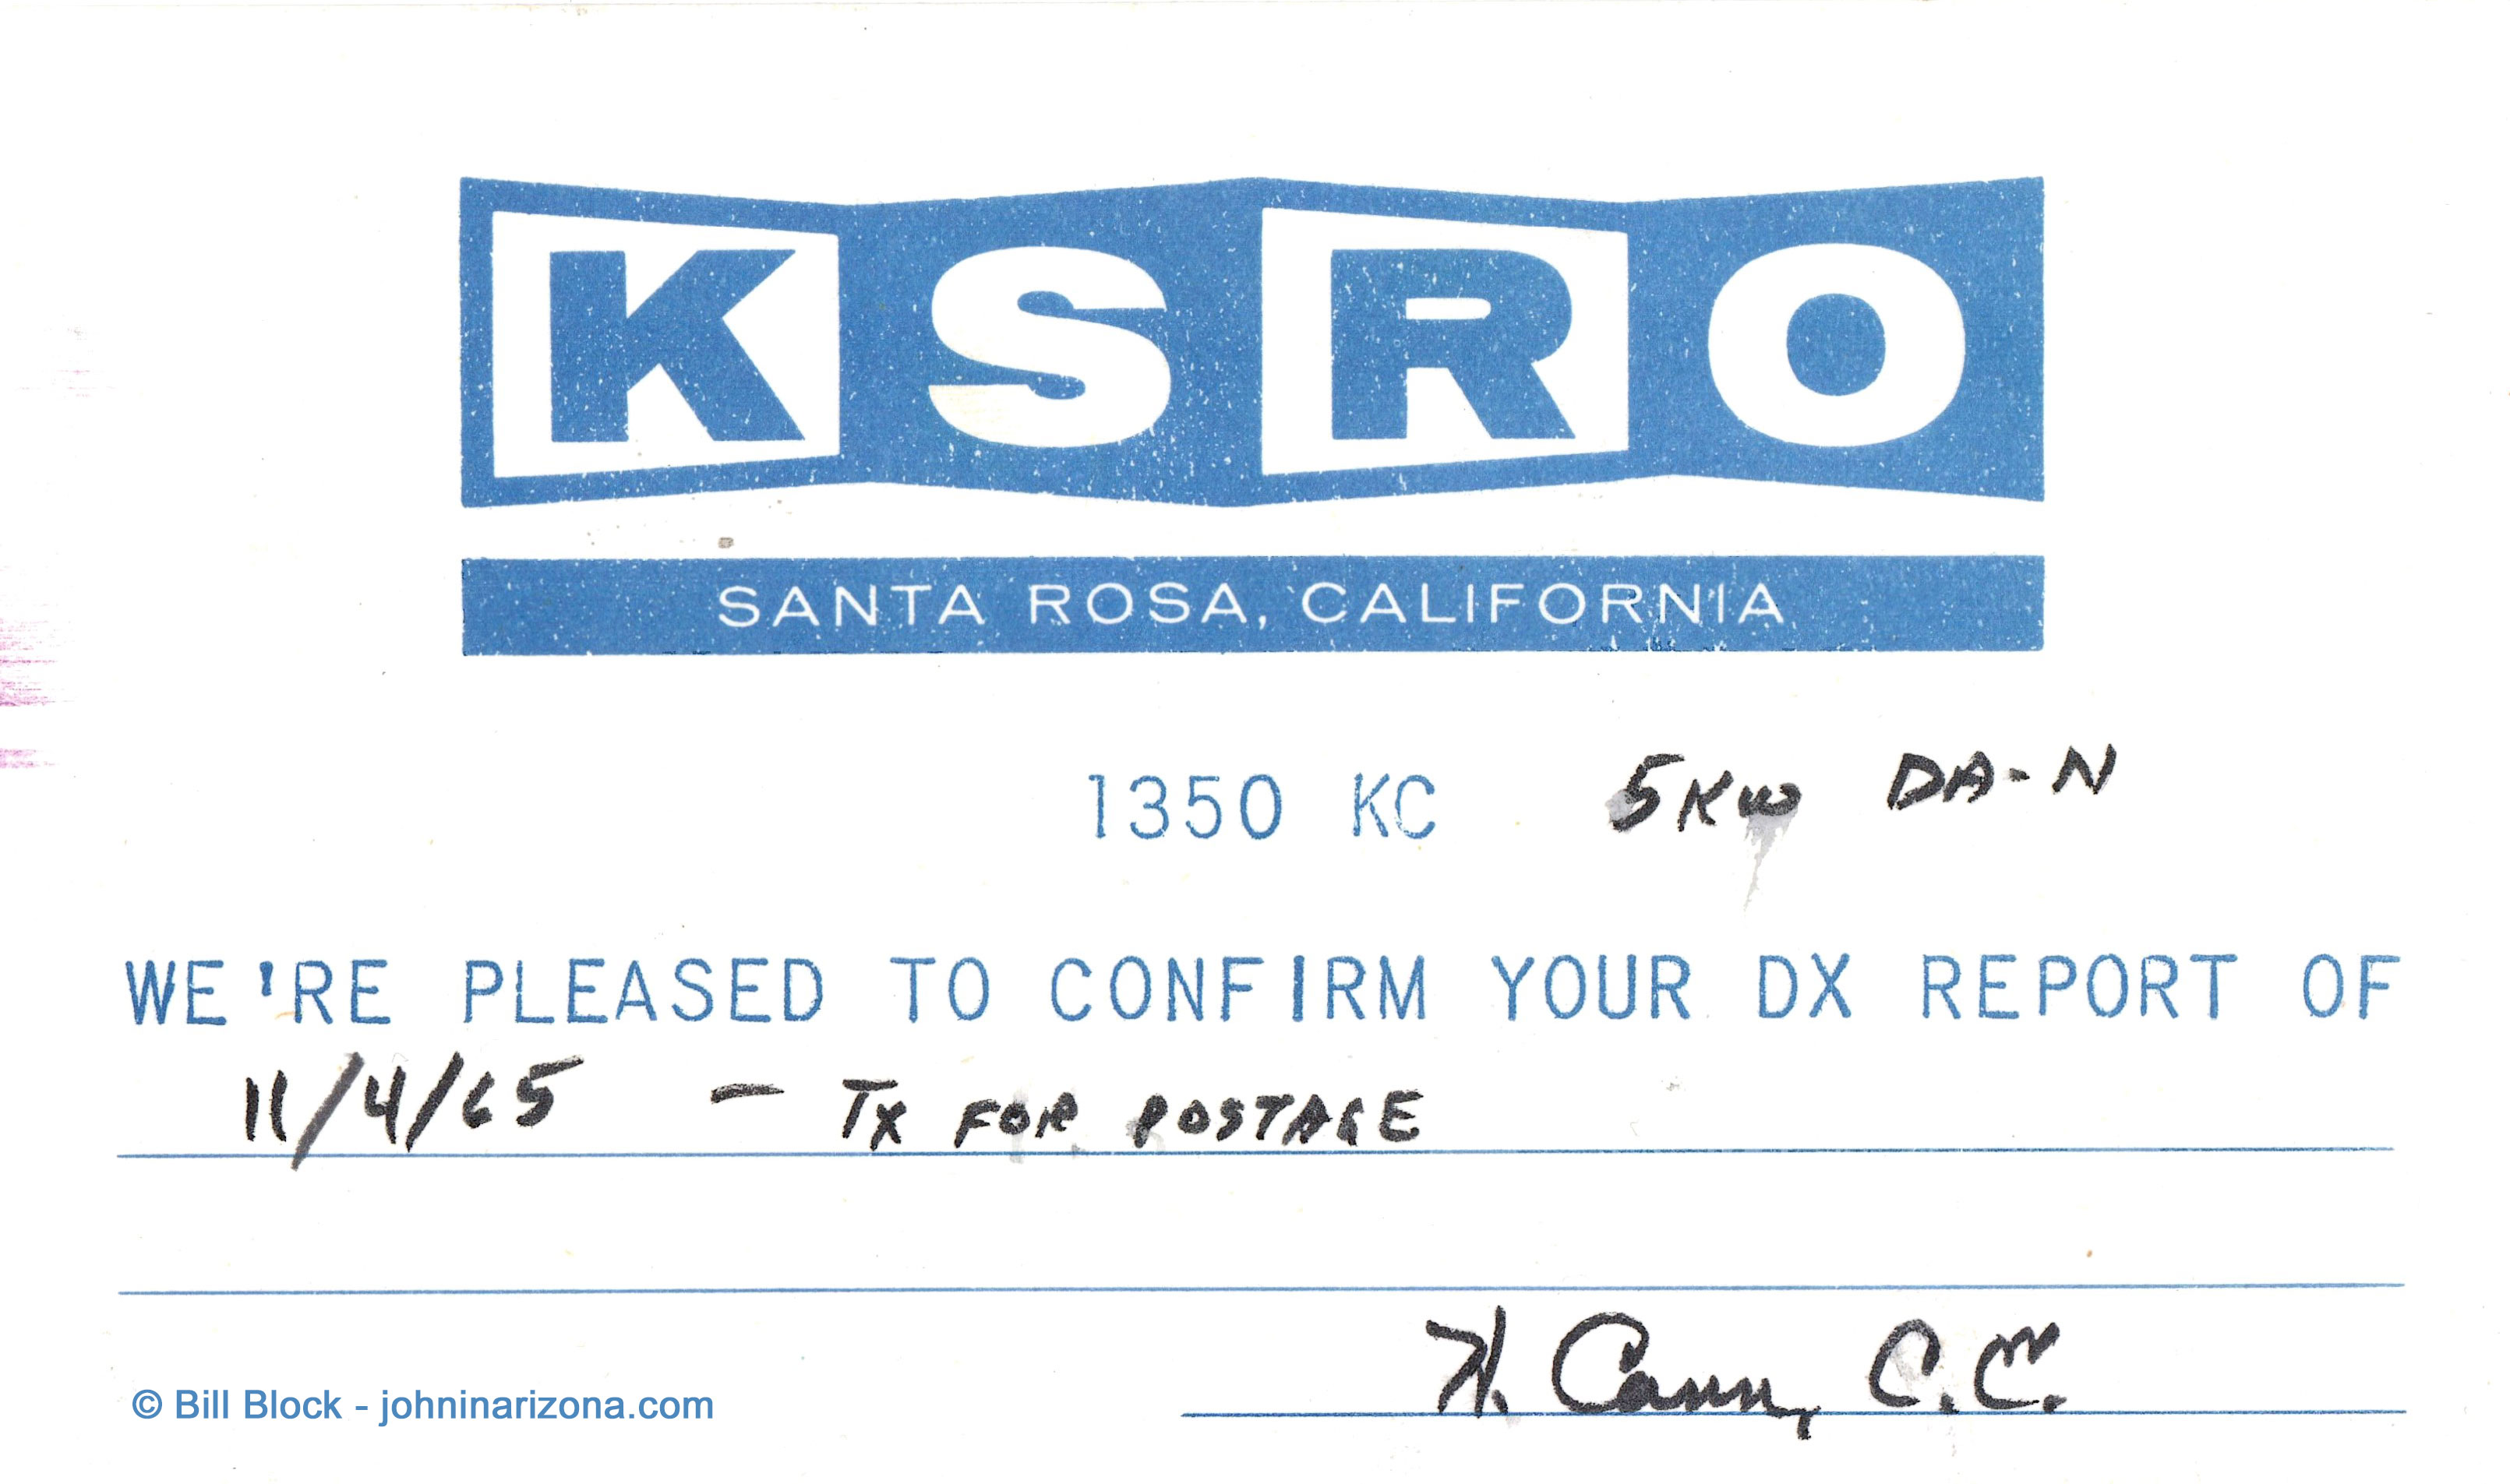 KSRO Radio 1350 Santa Rosa, California